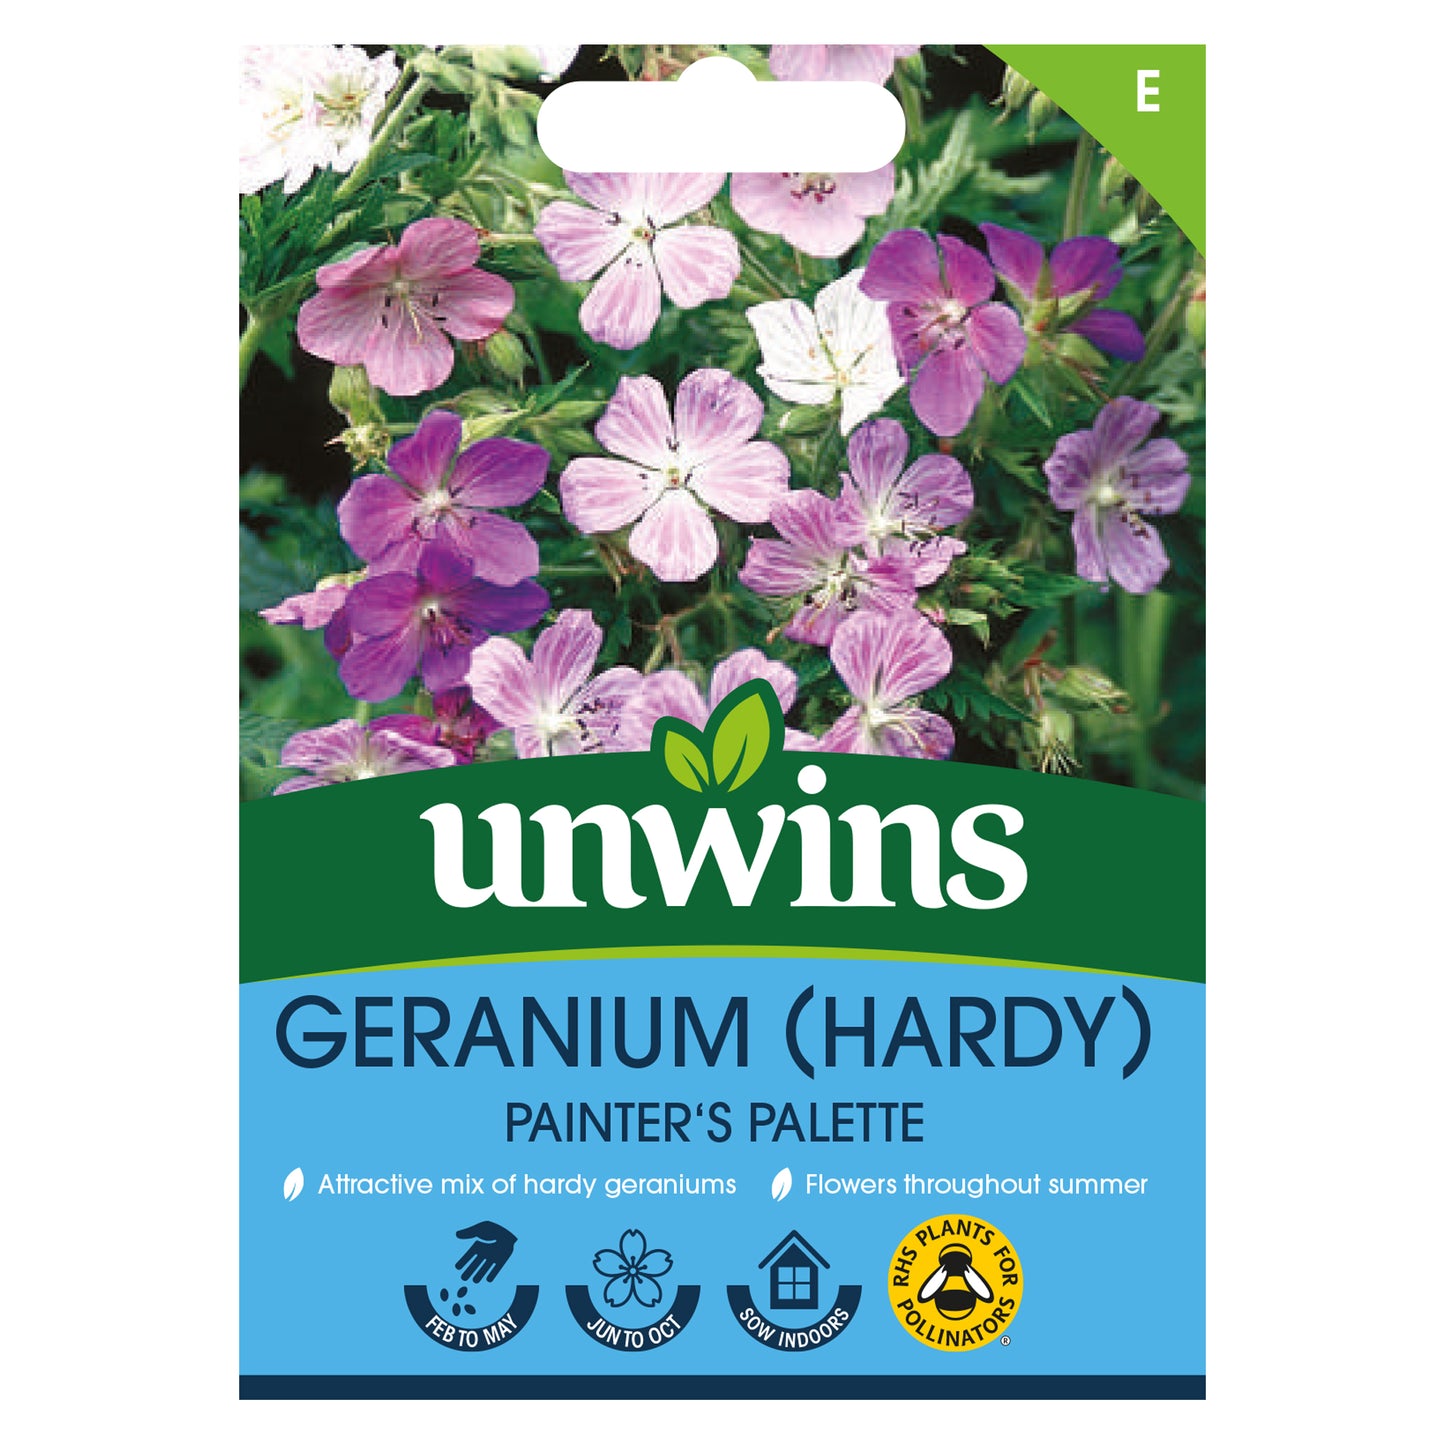 Unwins Hardy Geranium Painter's Palette Seeds front of pack